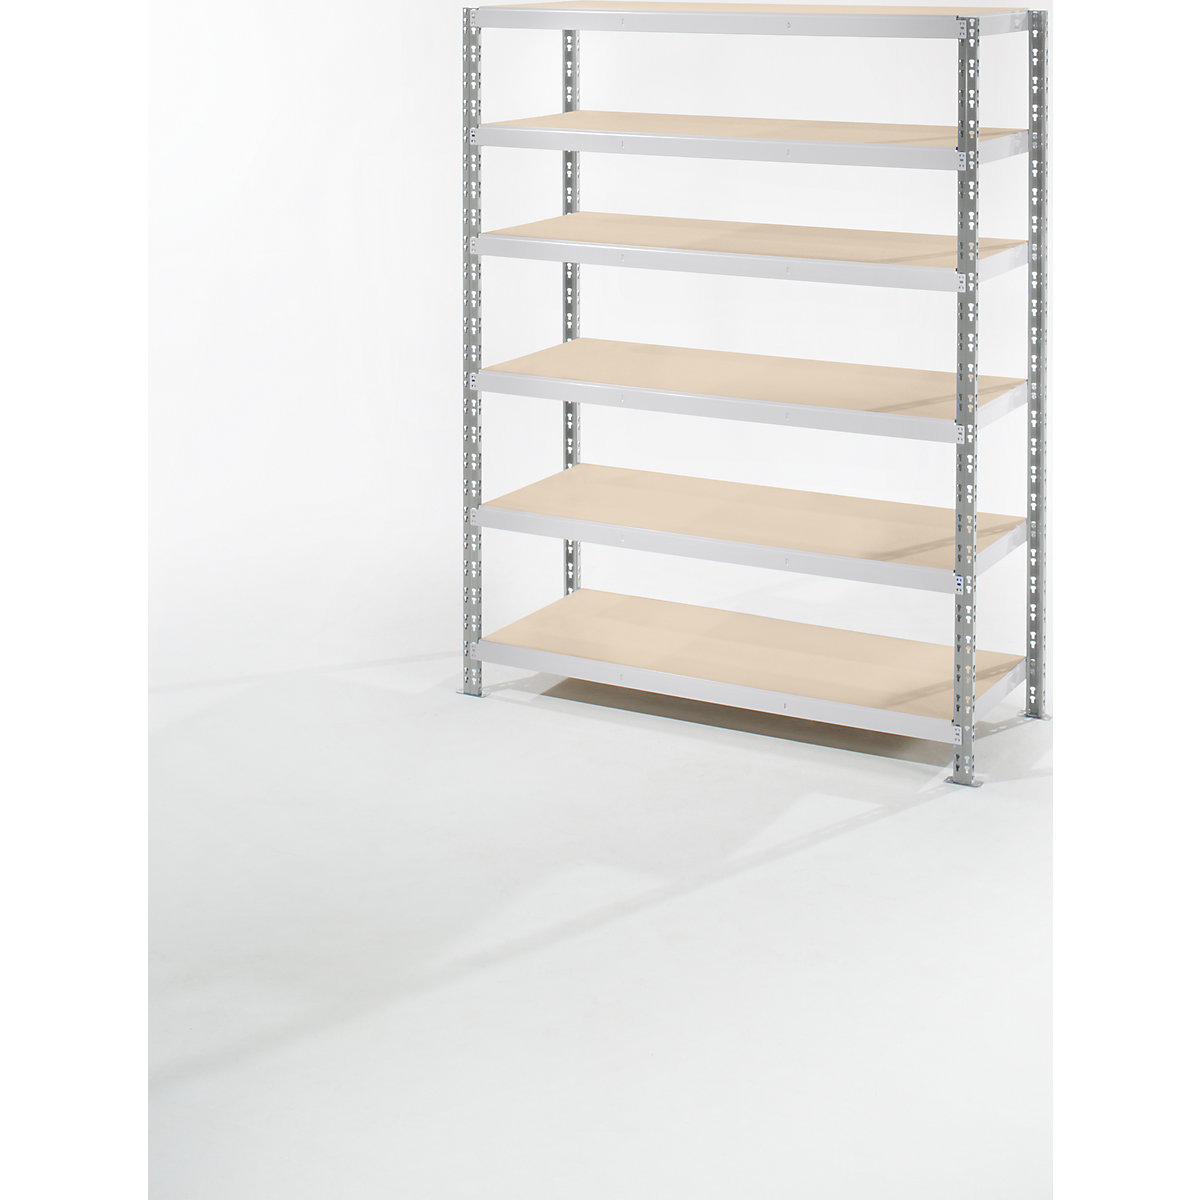 Wide span boltless shelf unit with moulded chipboard shelves, depth 600 mm, extension shelf unit, HxW 1976 x 1525 mm